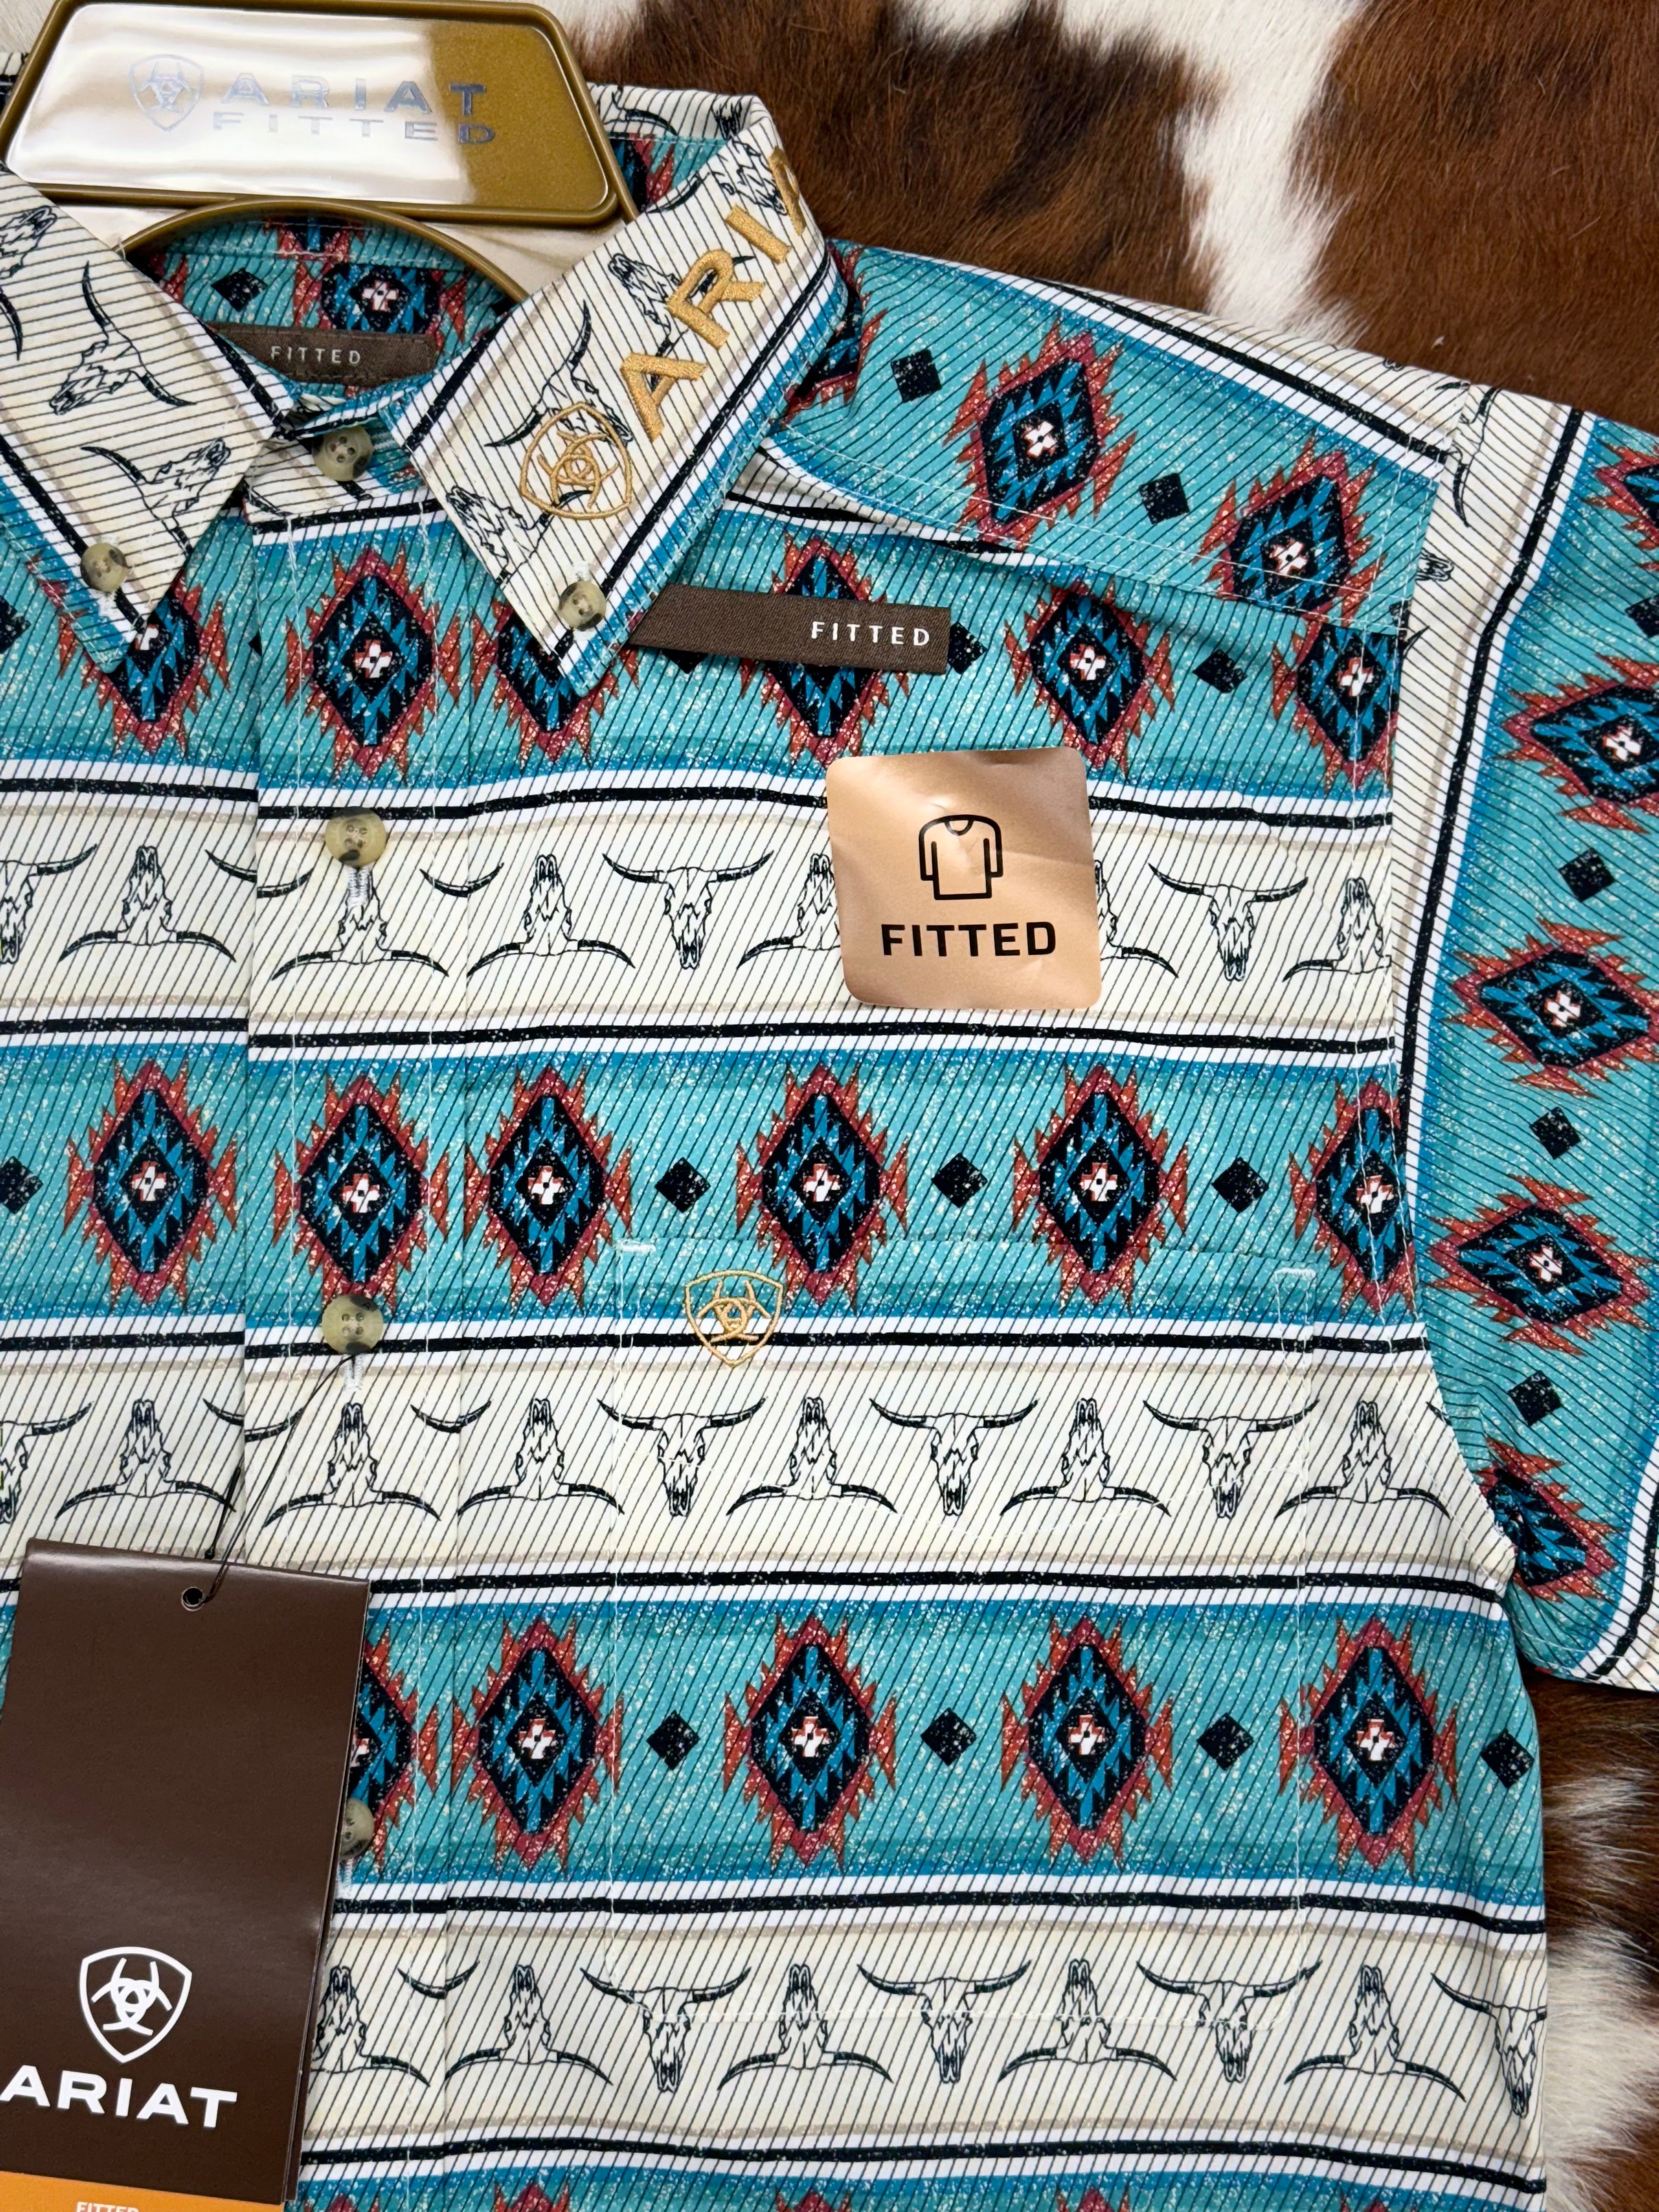 Ariat Shirt Fitted Aztec Team Cruz Sandshell